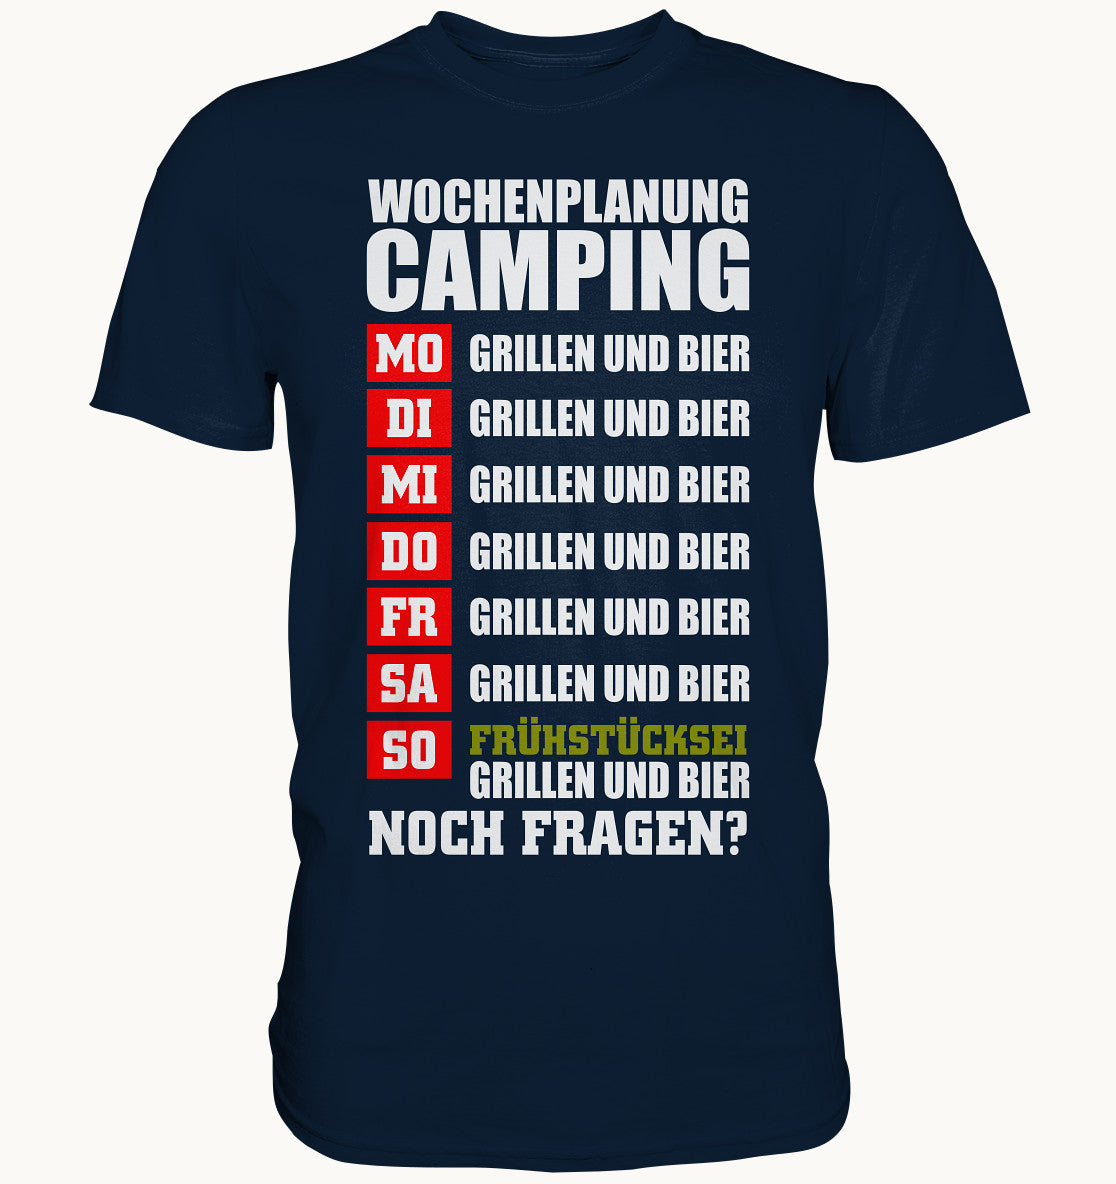 Wochendplanung Camping - Premium Shirt